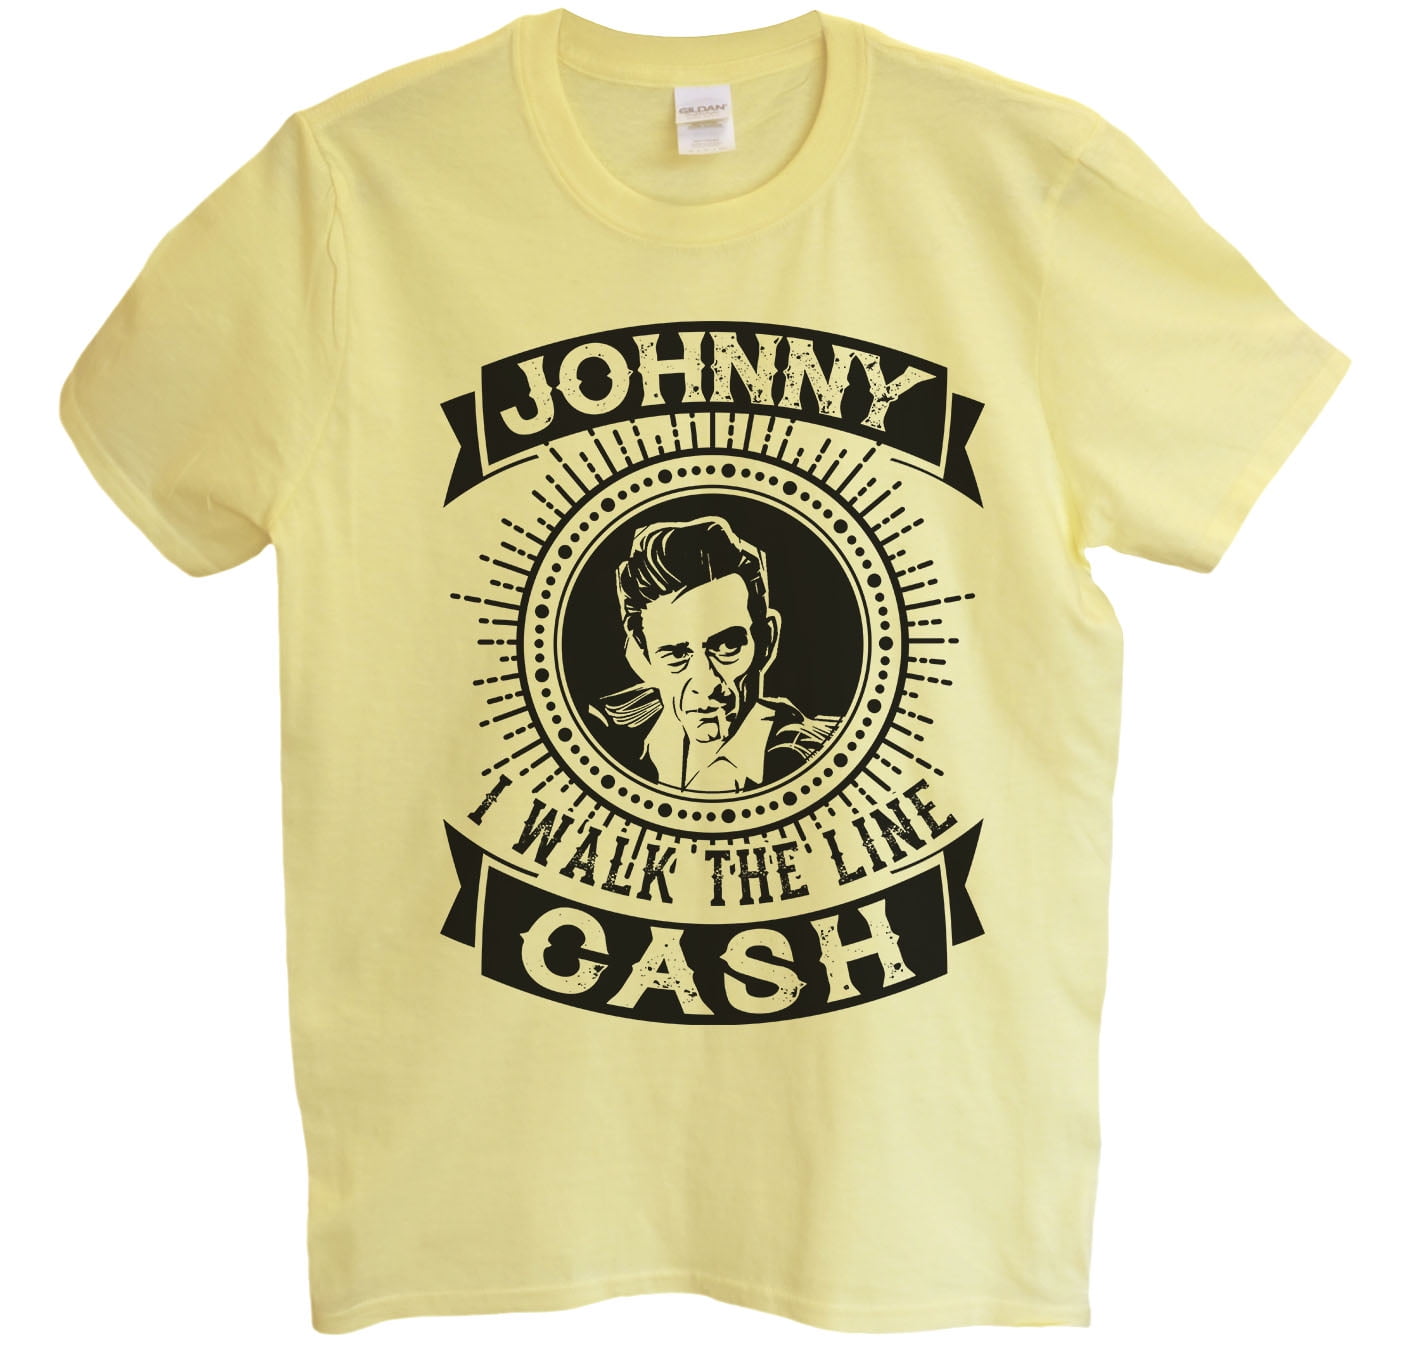 johnny cash shirt walmart